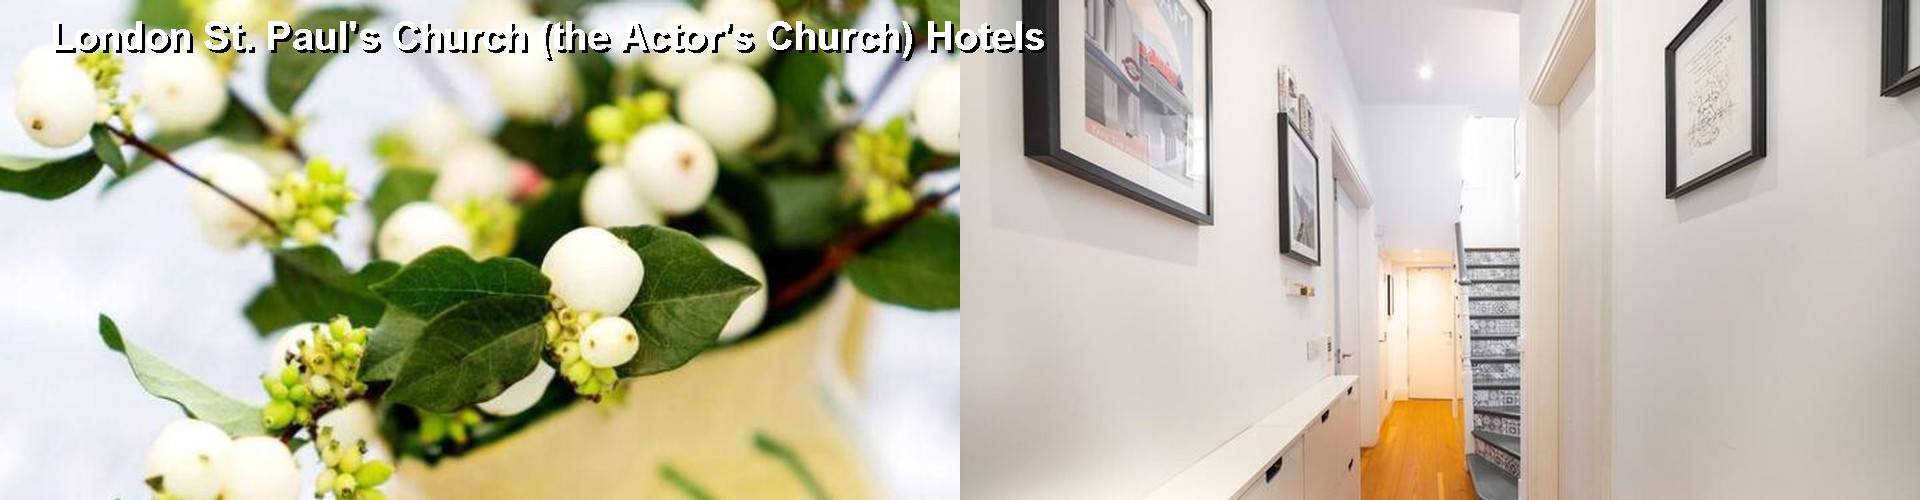 5 Best Hotels near London St. Paul's Church (the Actor's Church)